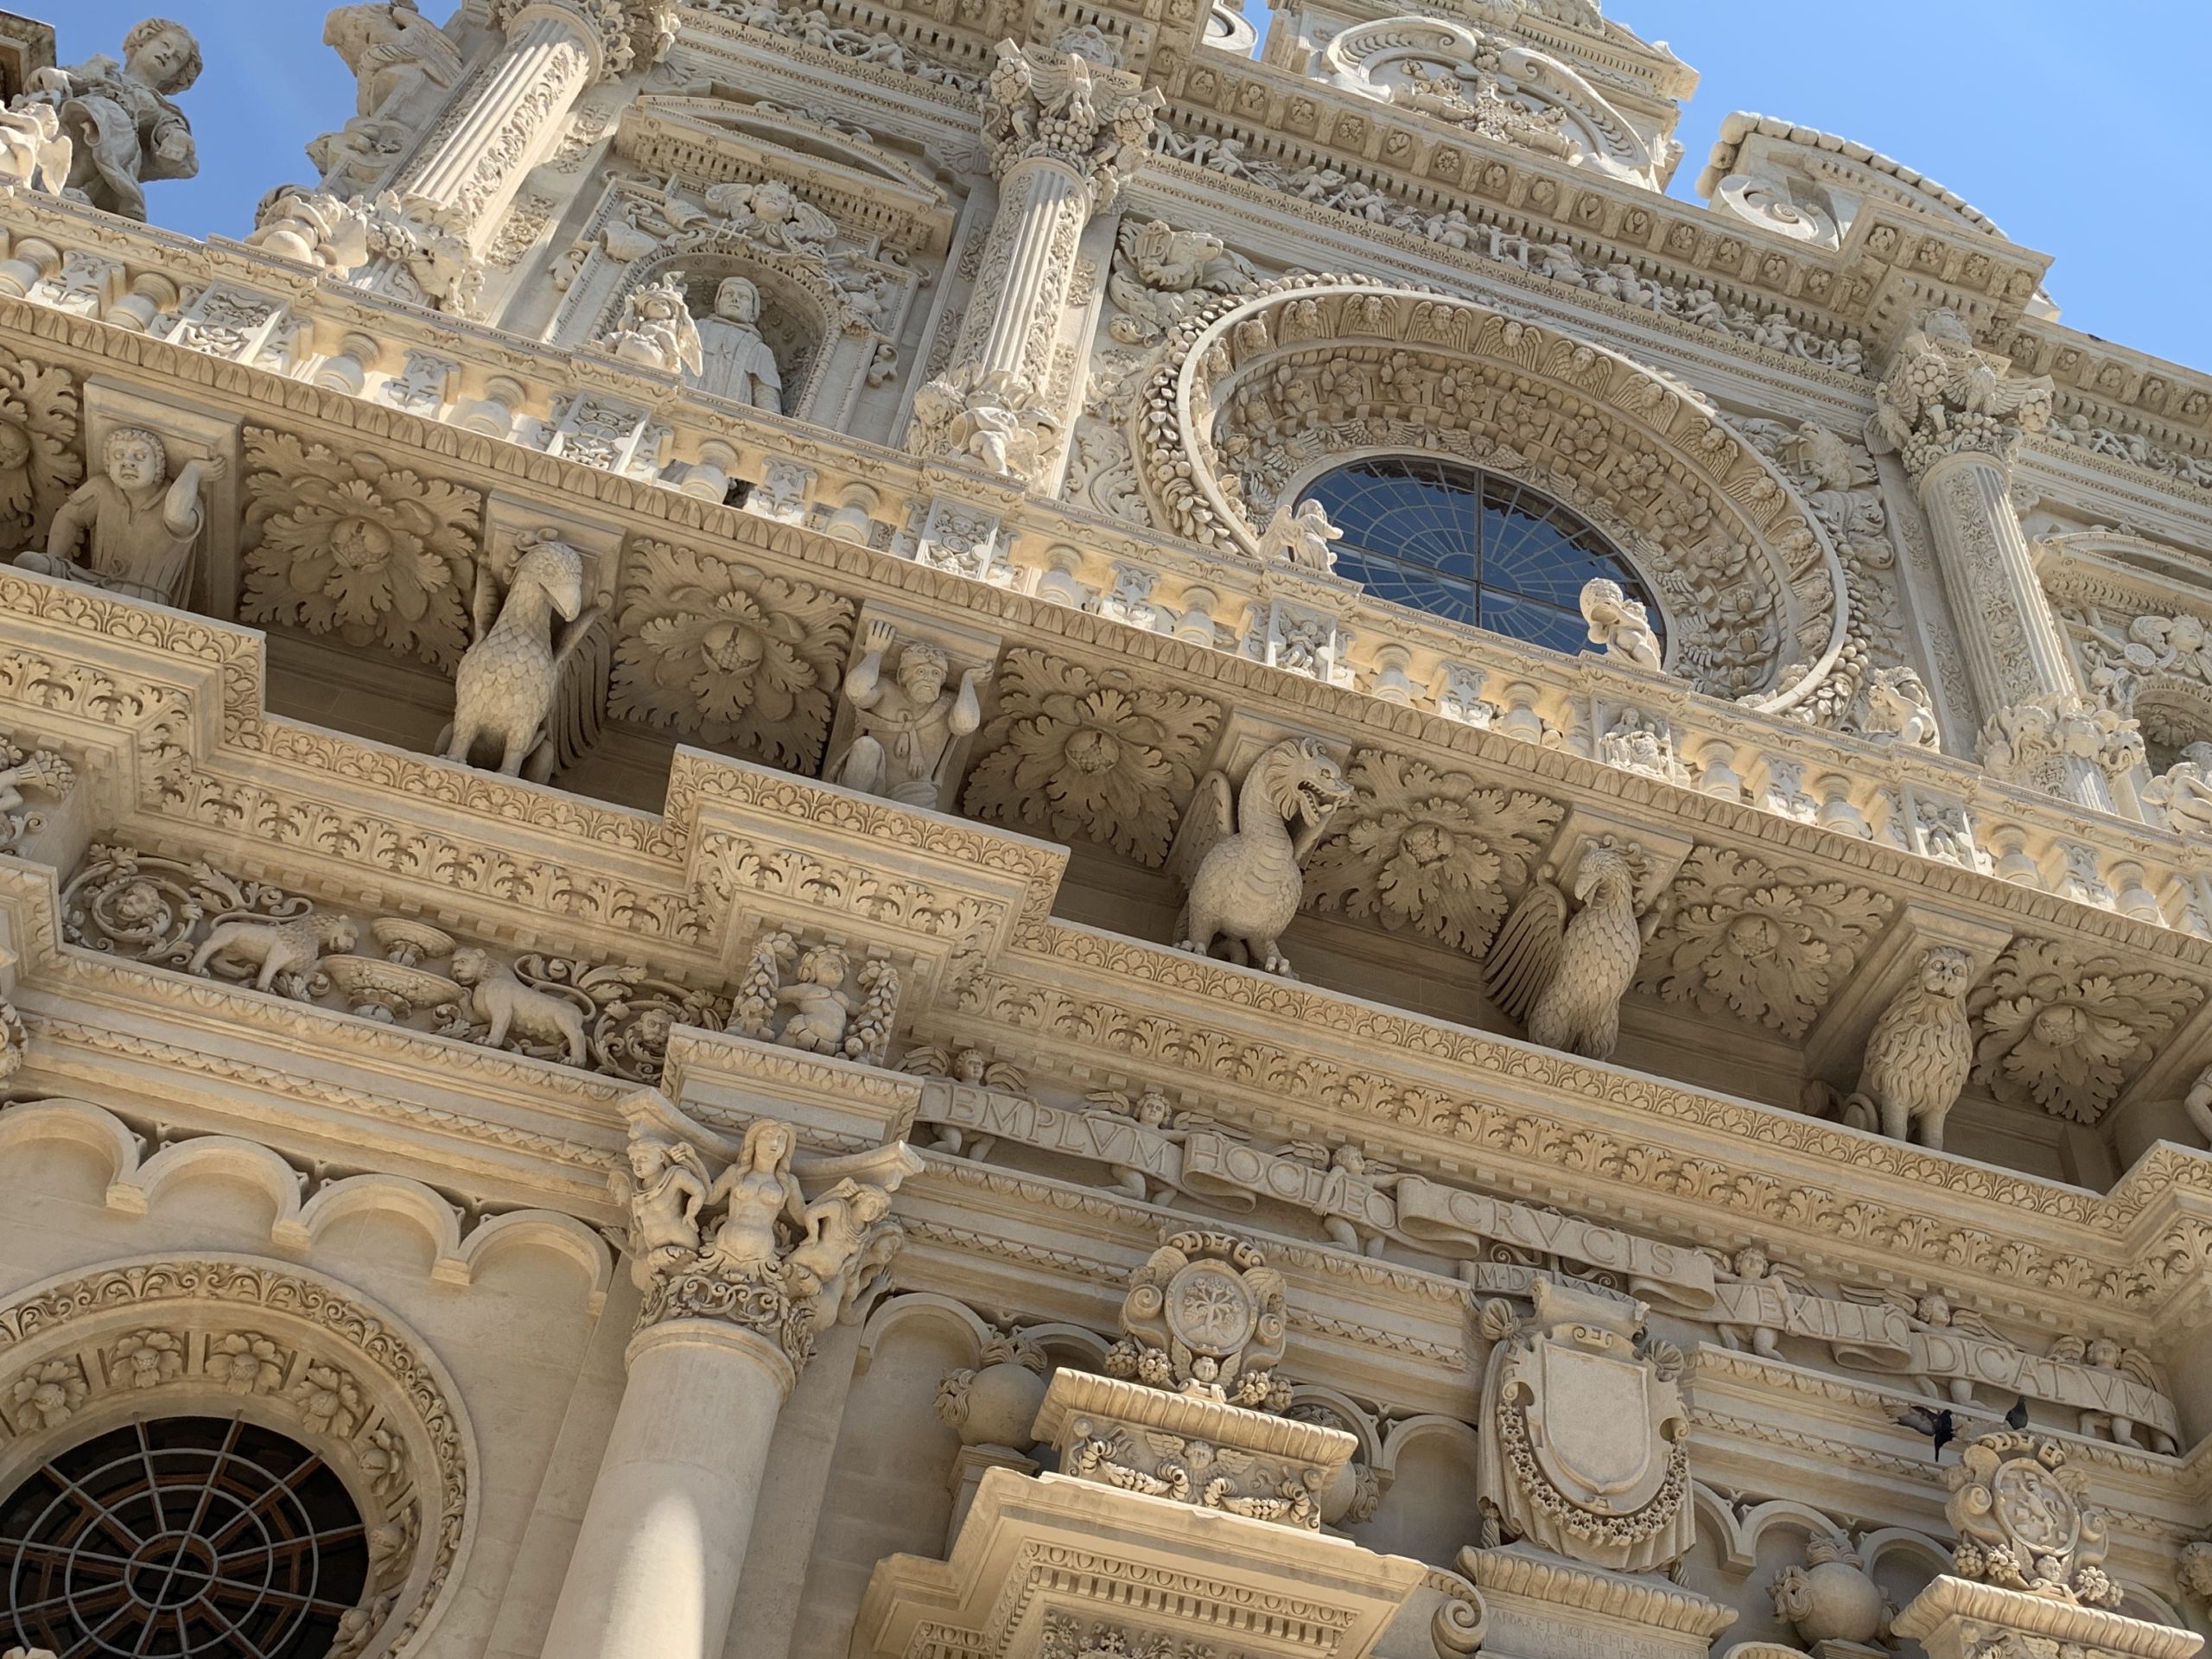 The Basilica di Santa Croce, Lecce is recently restored and one of Lecce’s most impressive Baroque buildings.